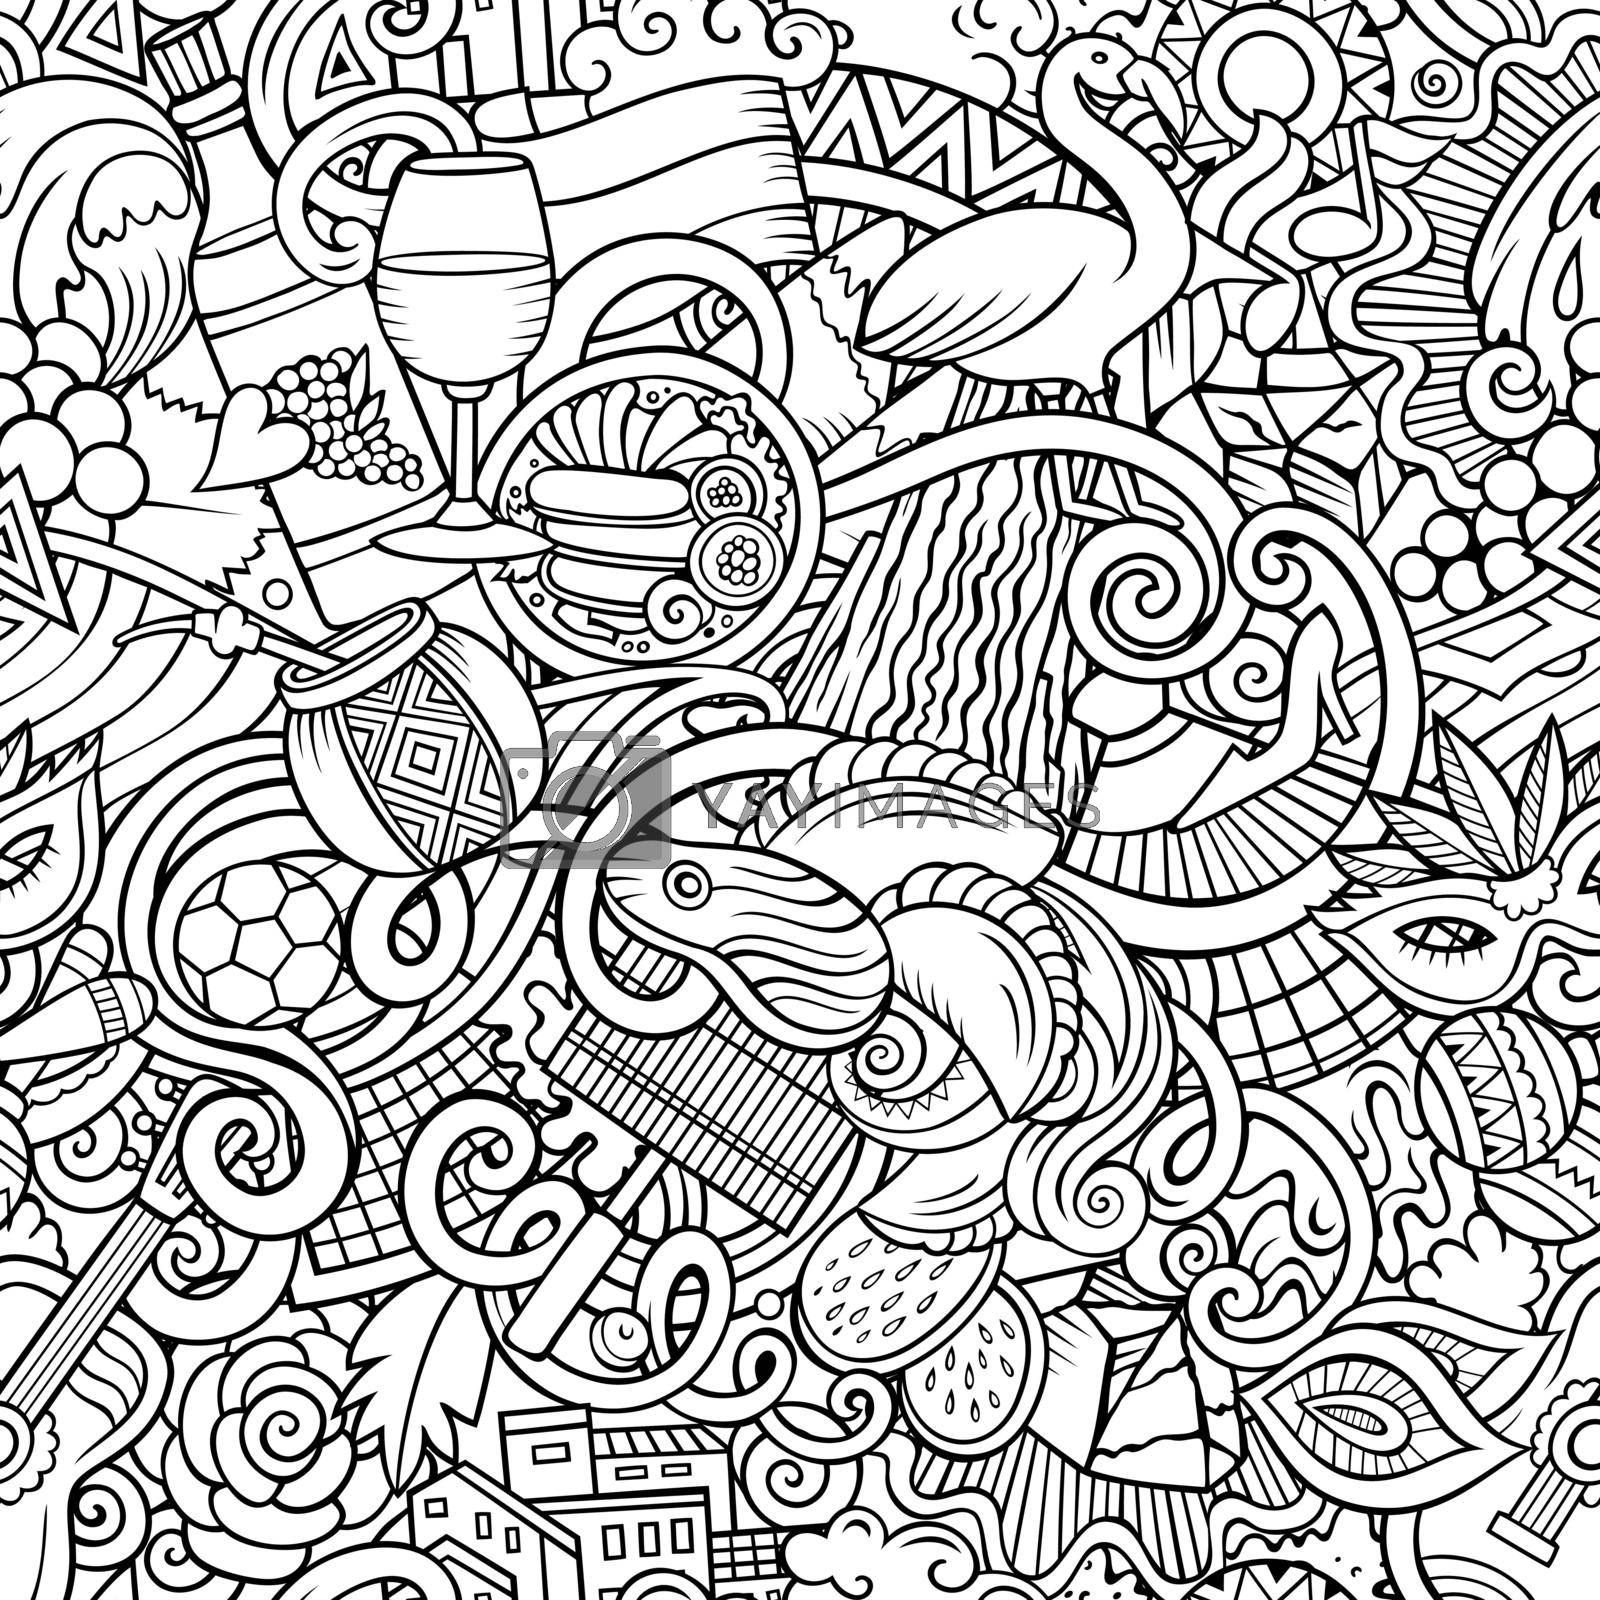 Royalty free image of Cartoon doodles Argentina seamless pattern. by balabolka